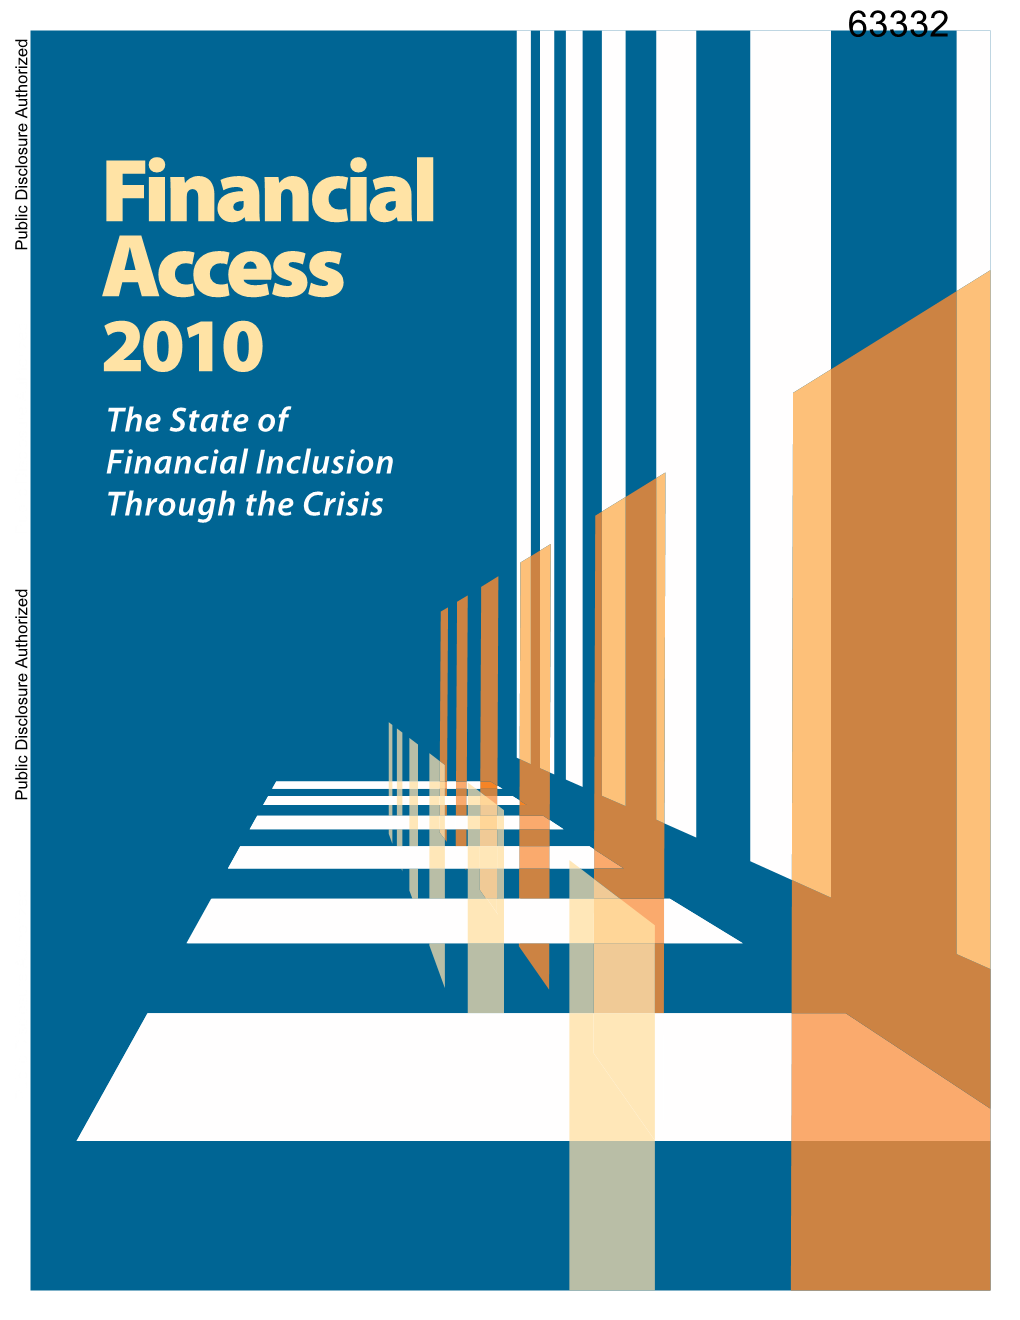 FINANCIAL ACCESS 2010 I